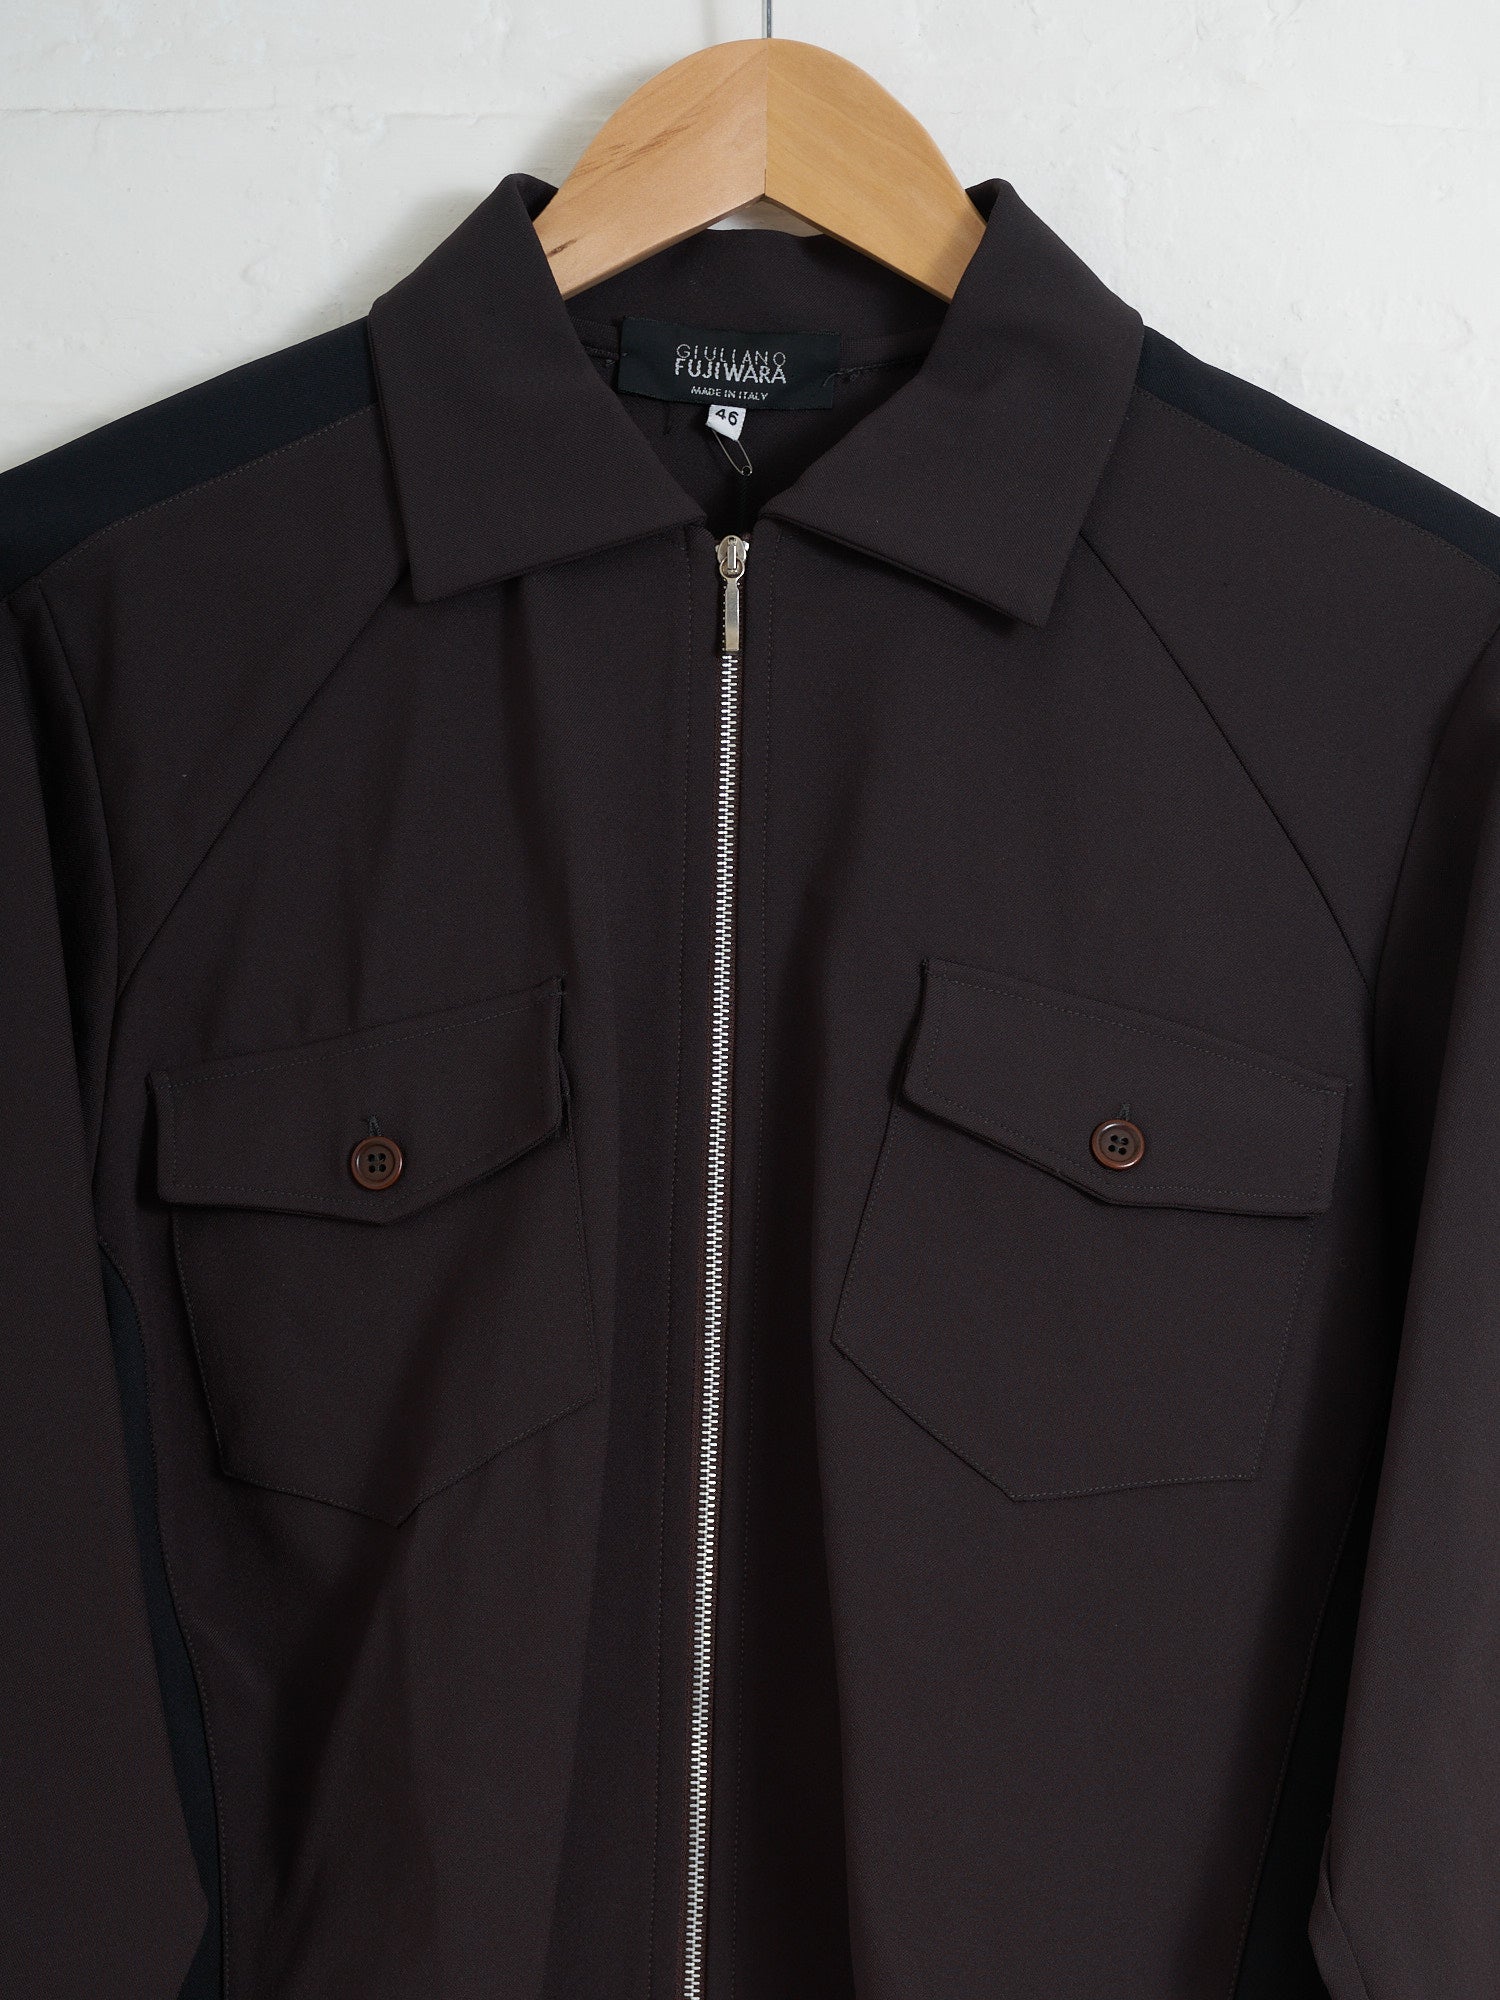 Giuliano Fujiwara zip front shirt jacket with contrast panel - size 46